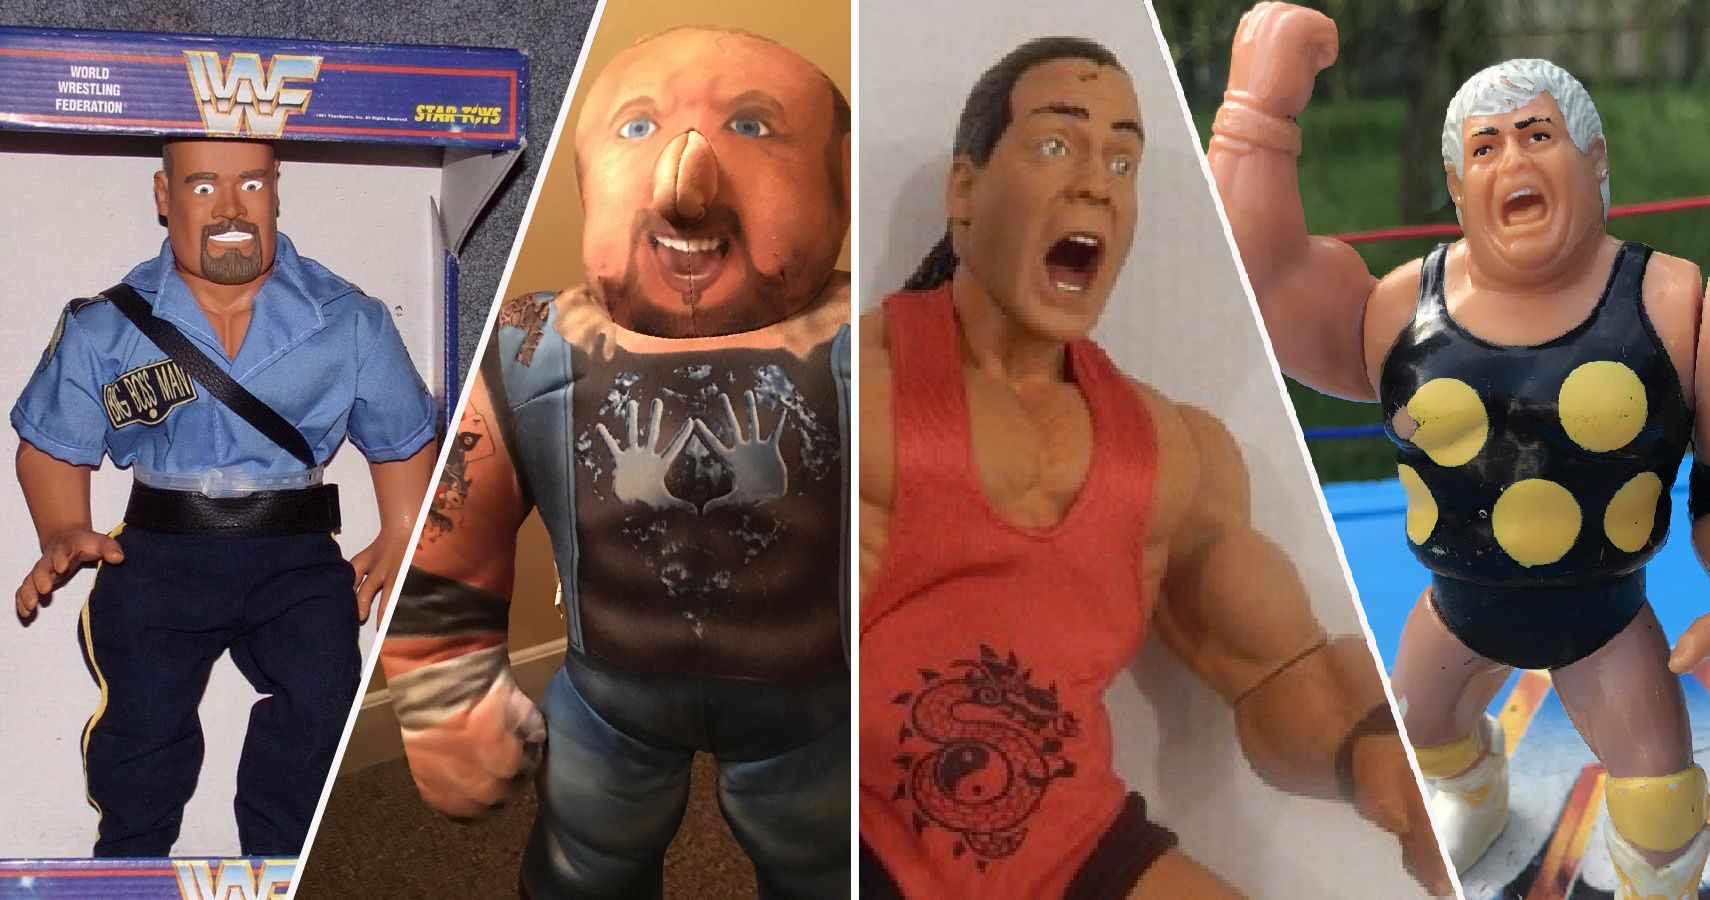 Legends of Wrestling Action Figures - Figures Toy Company